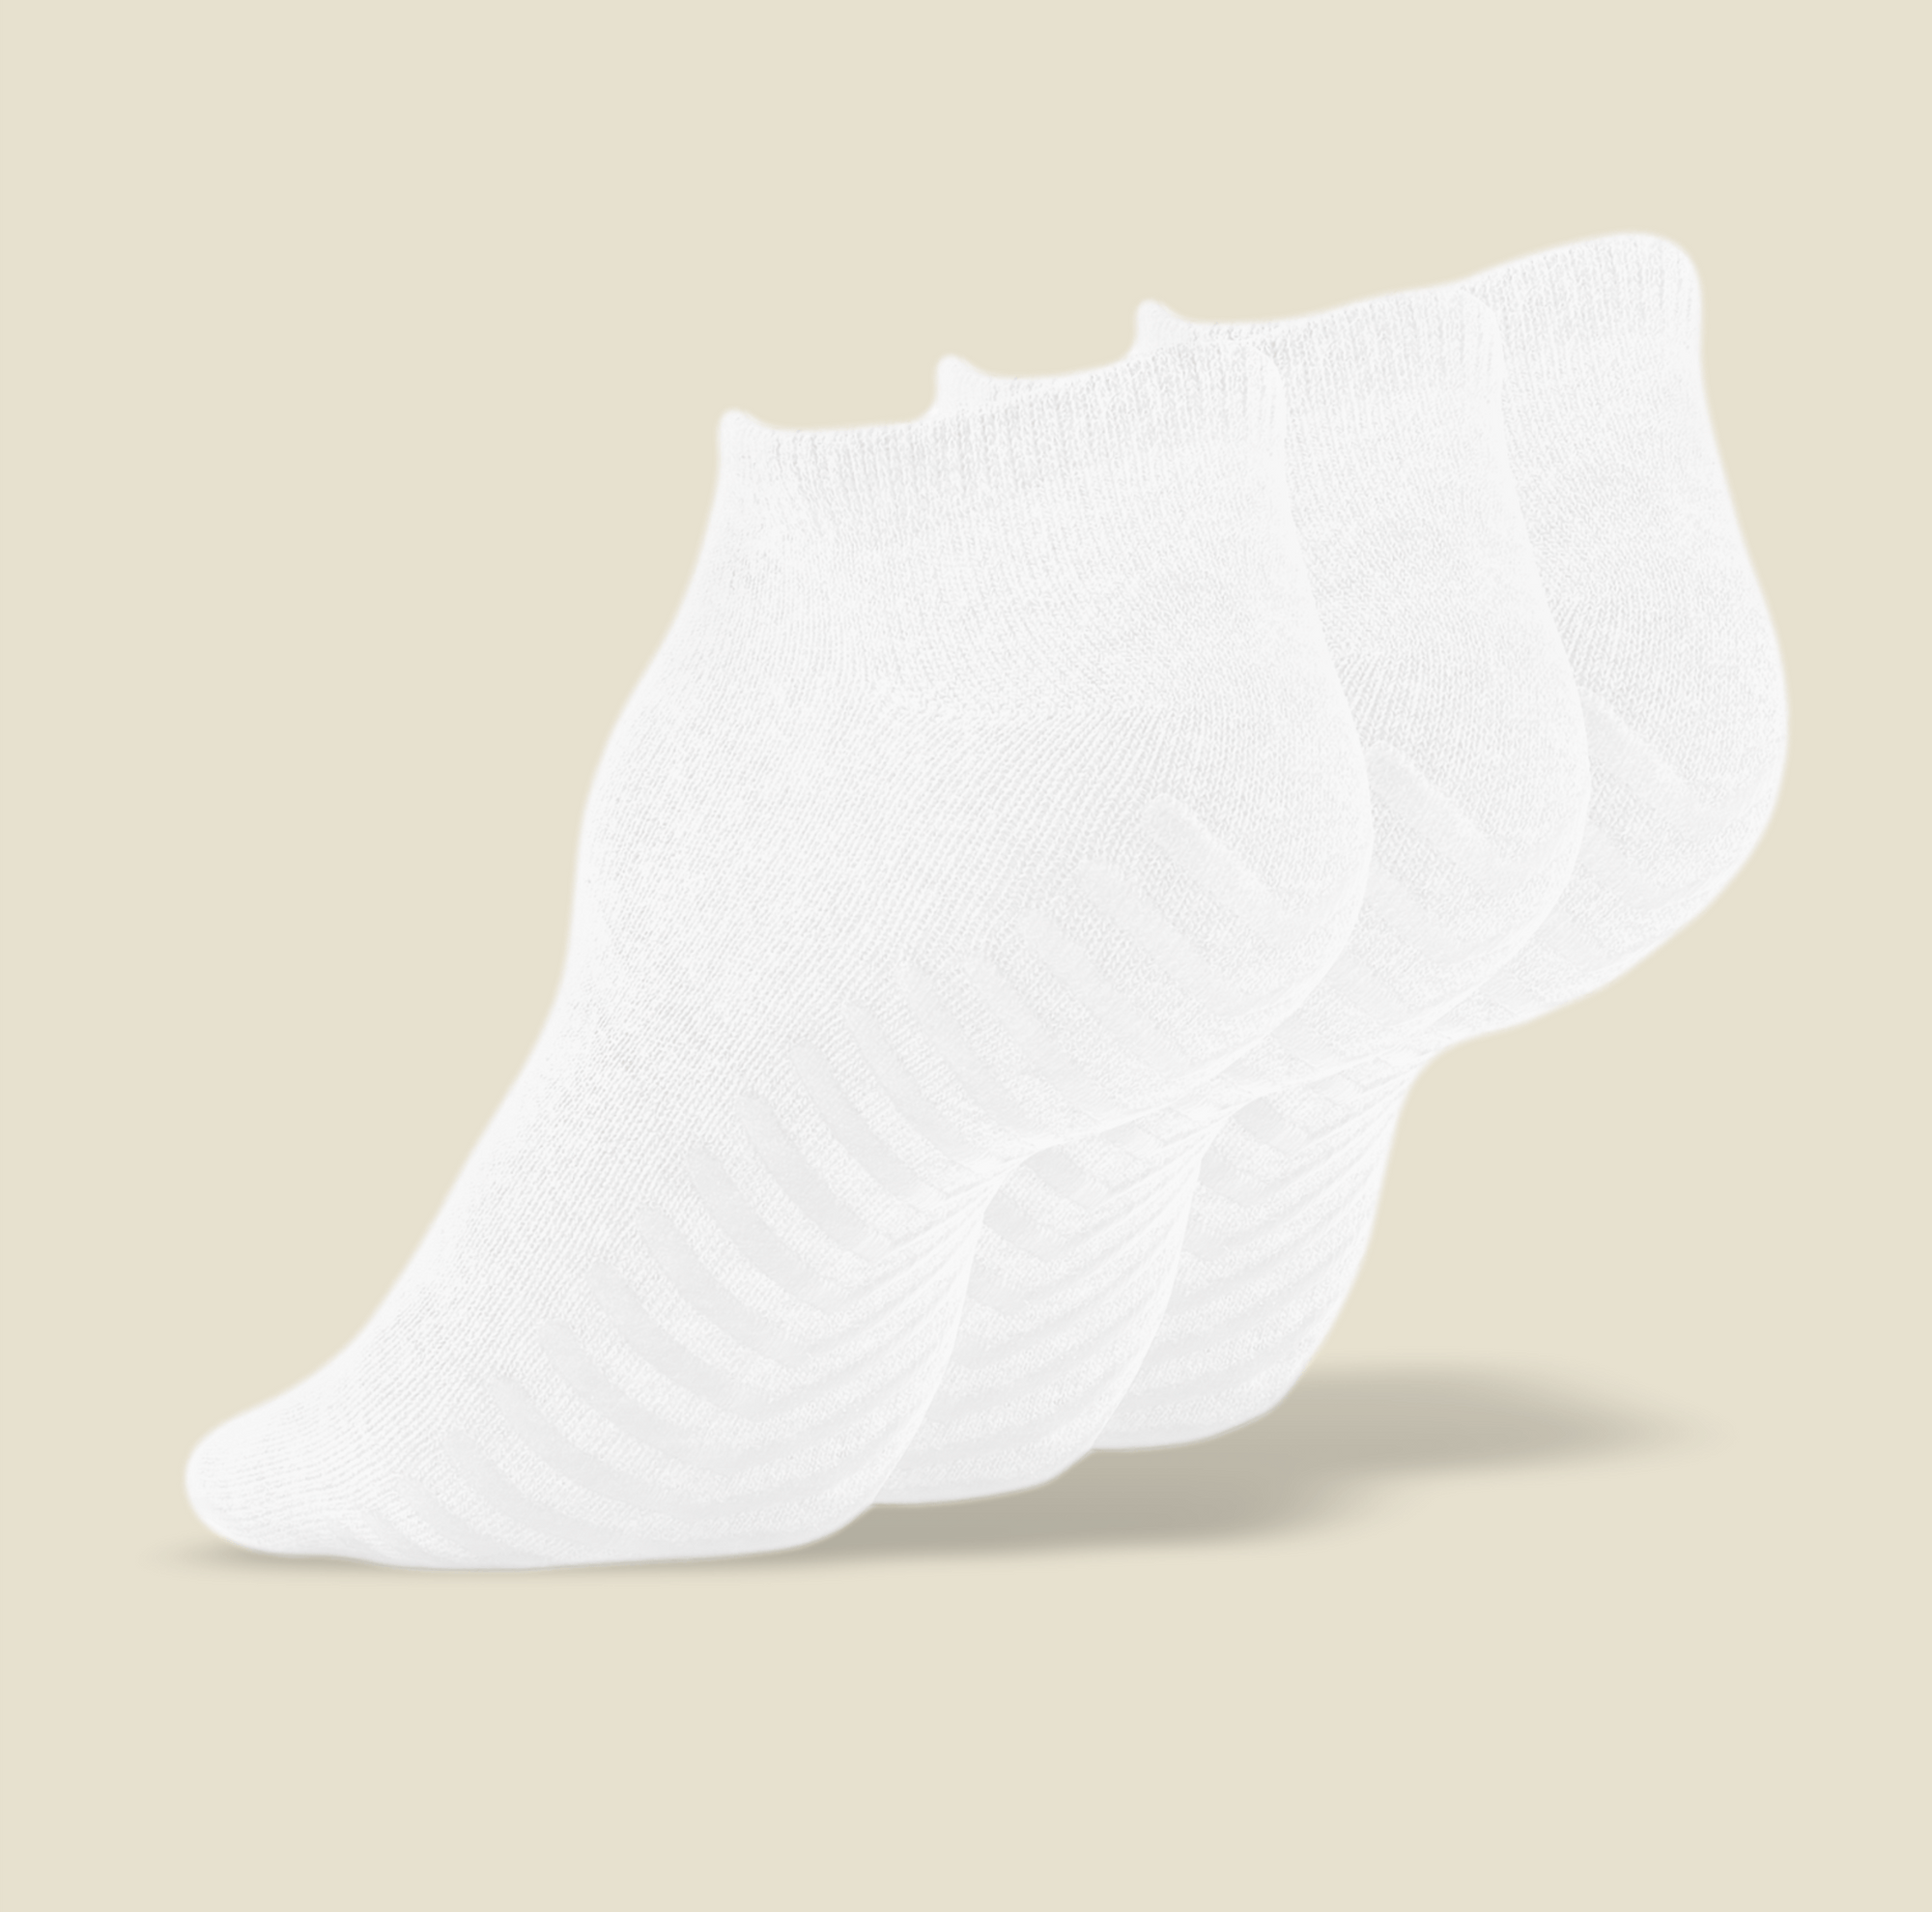 Women's White Low Cut Ankle Non Skid Socks - 3 pairs - Gripjoy Socks